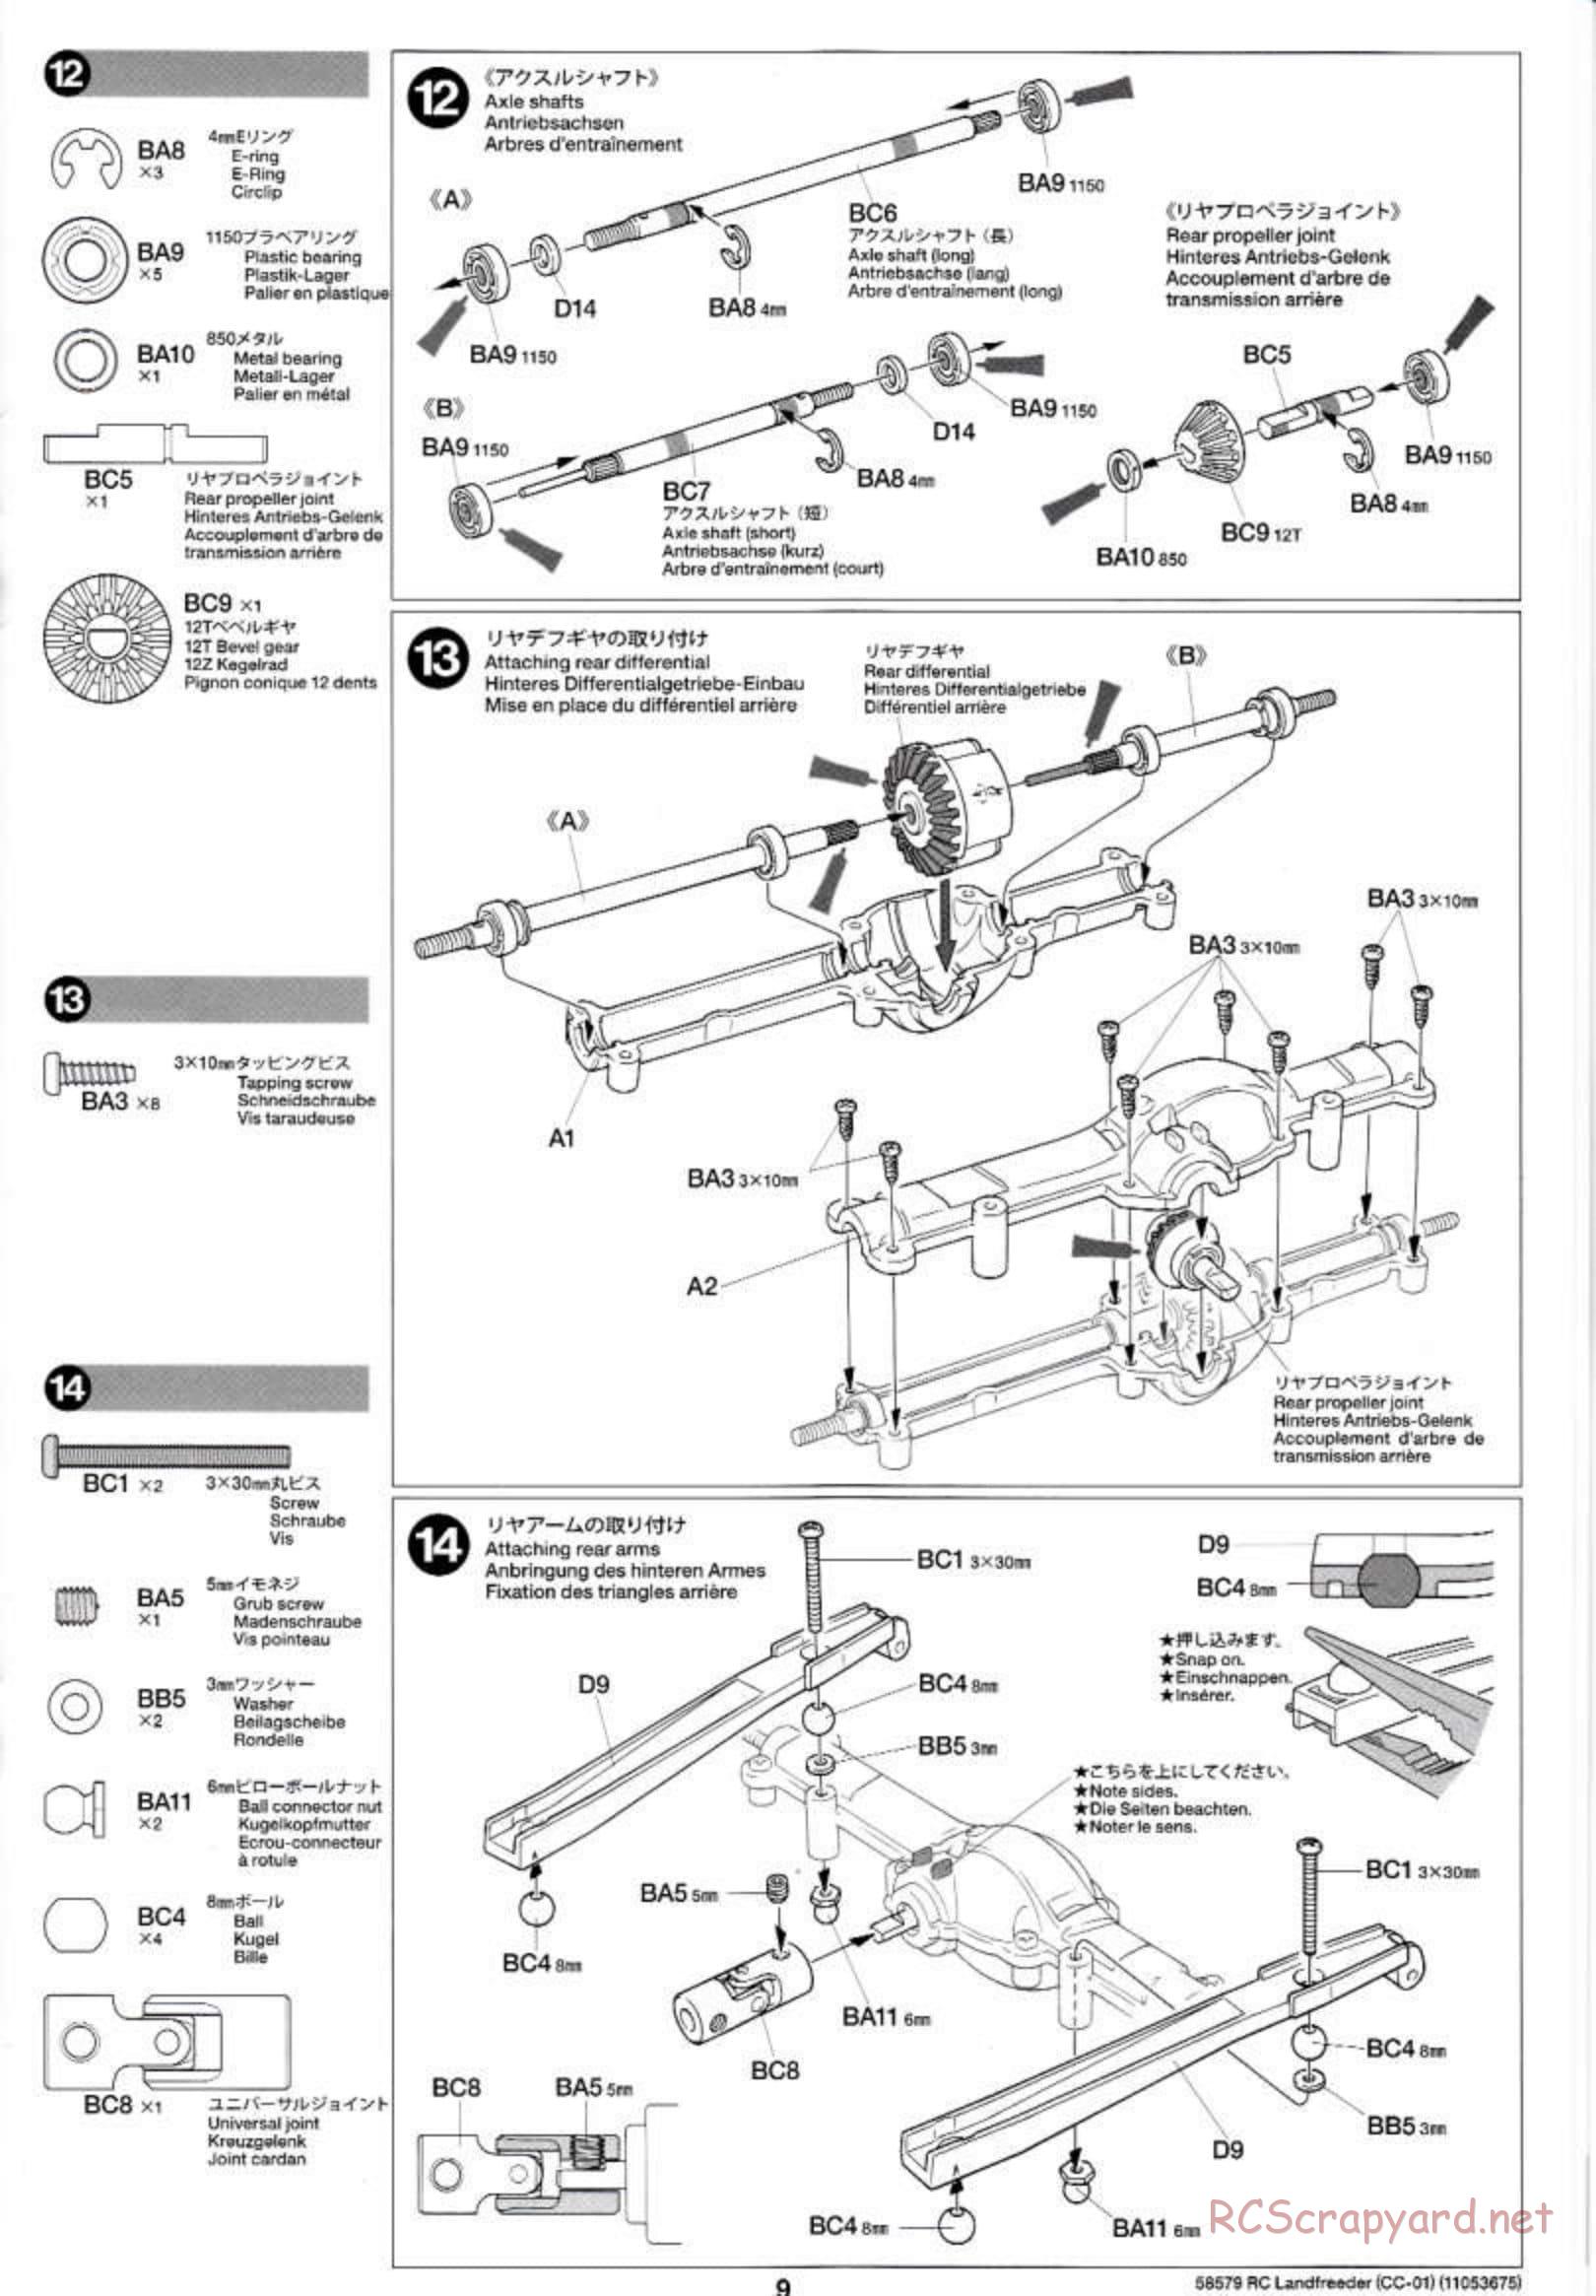 Tamiya - LandFreeder - CC-01 Chassis - Manual - Page 9